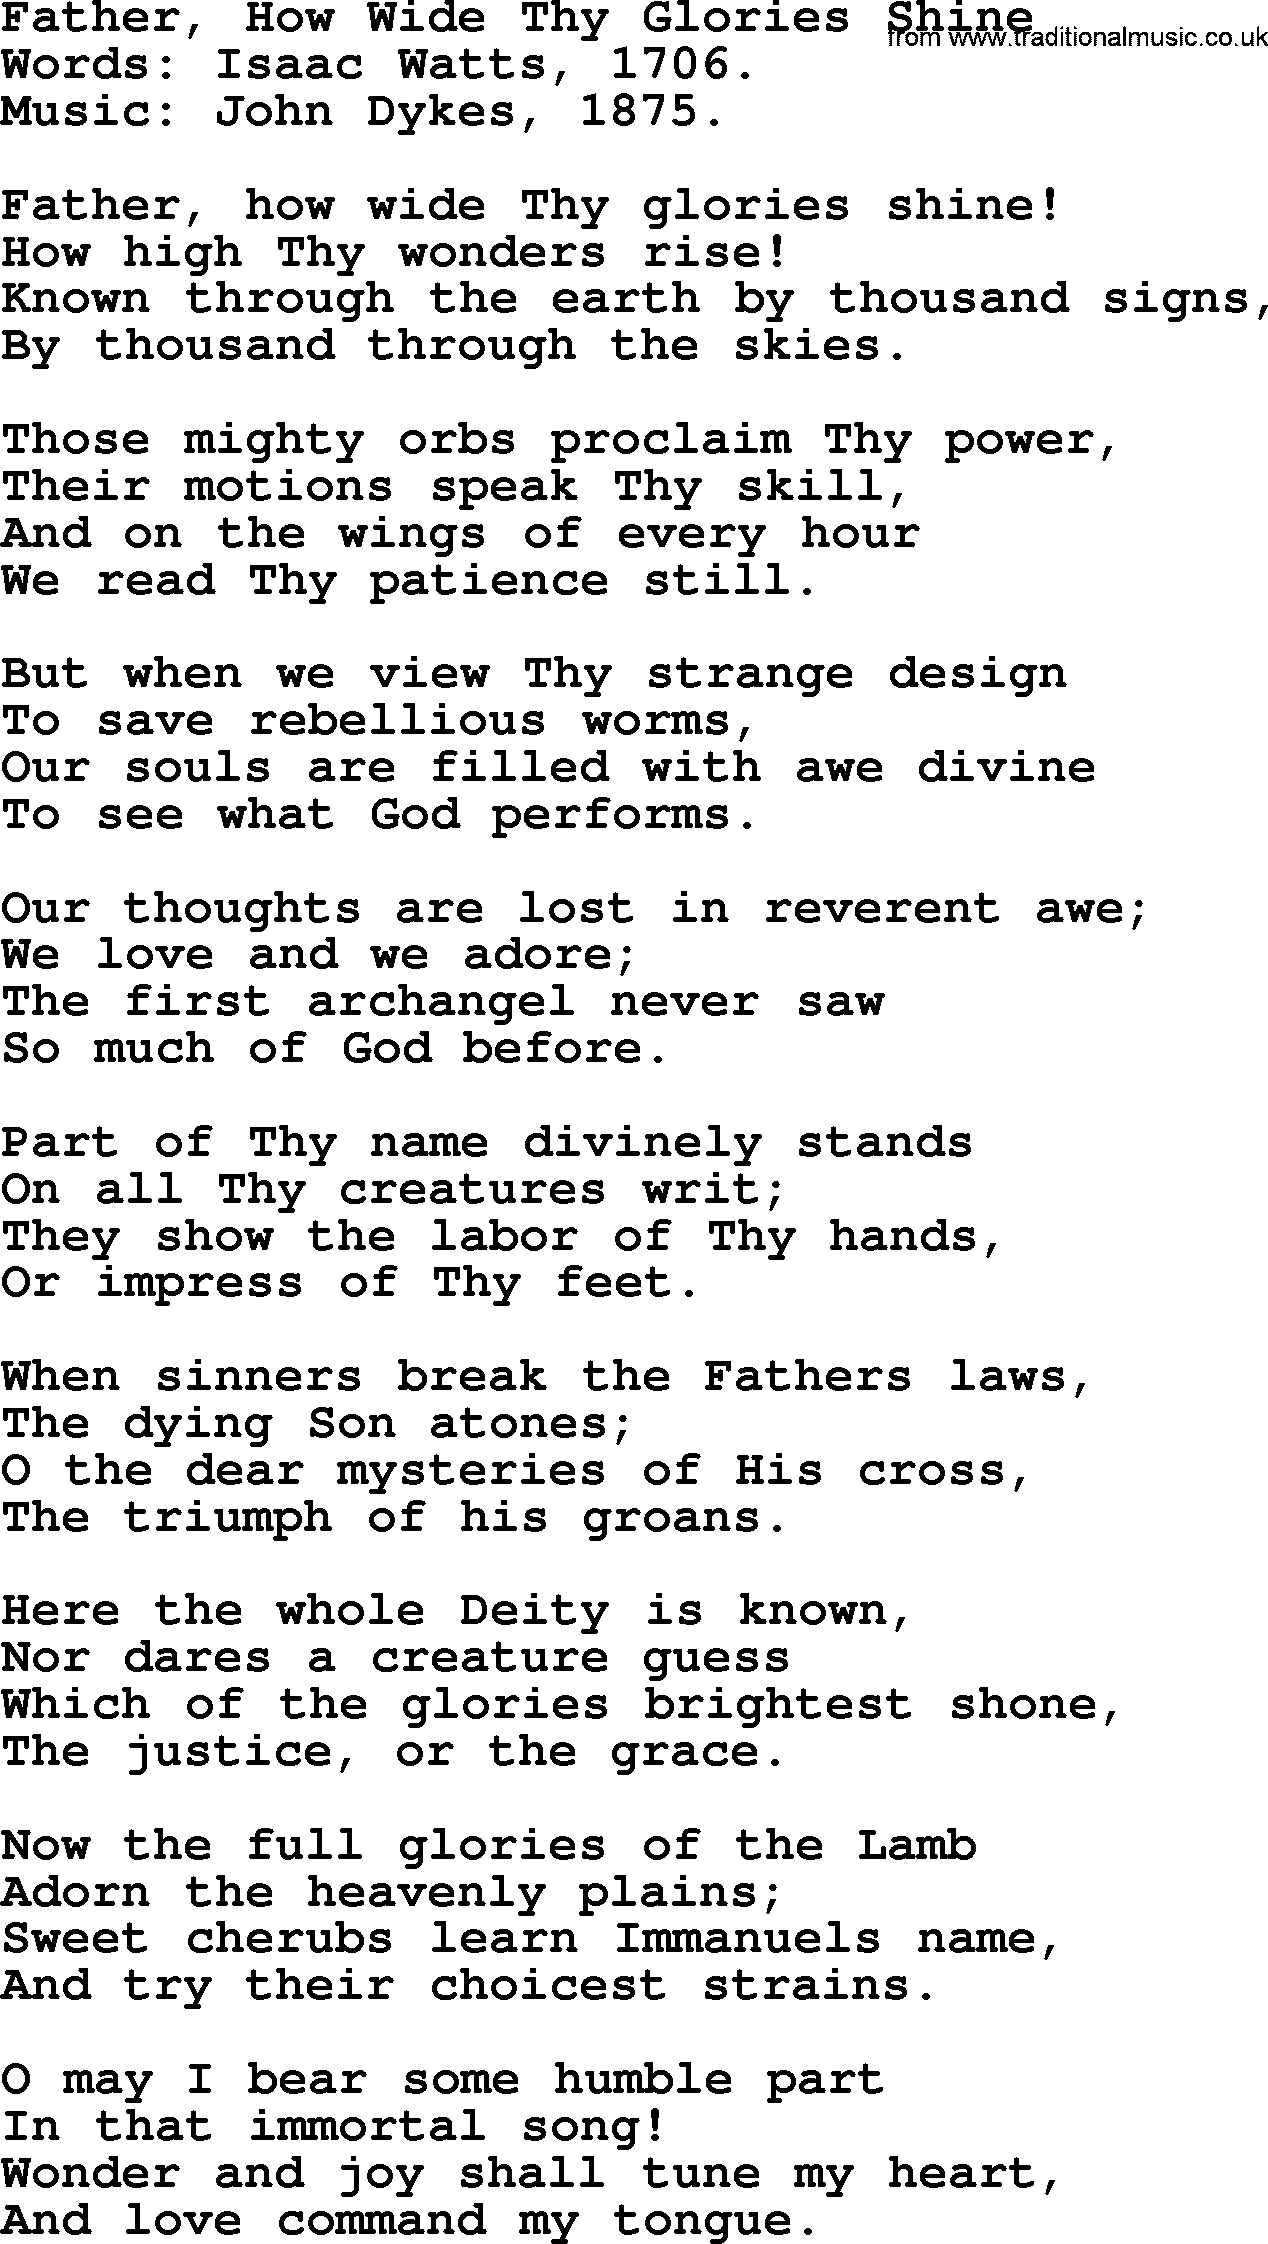 Isaac Watts Christian hymn: Father, How Wide Thy Glories Shine- lyricss